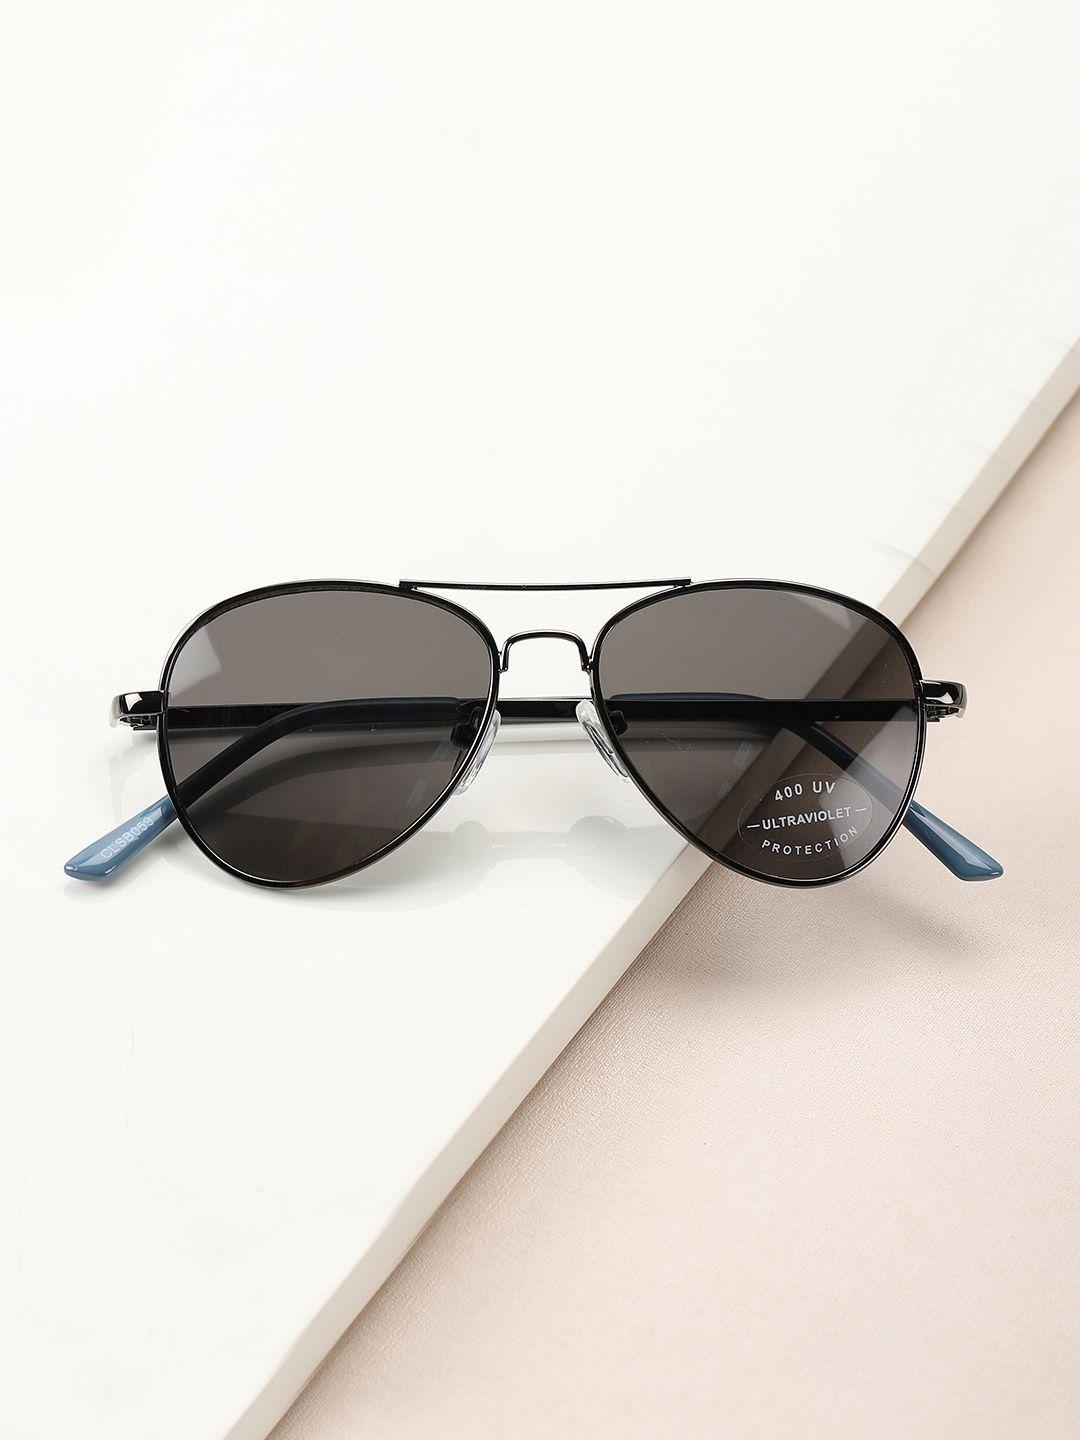 carlton-london-boys-black-lens-&-gunmetal-toned-aviator-sunglasses-with-uv-protected-lens